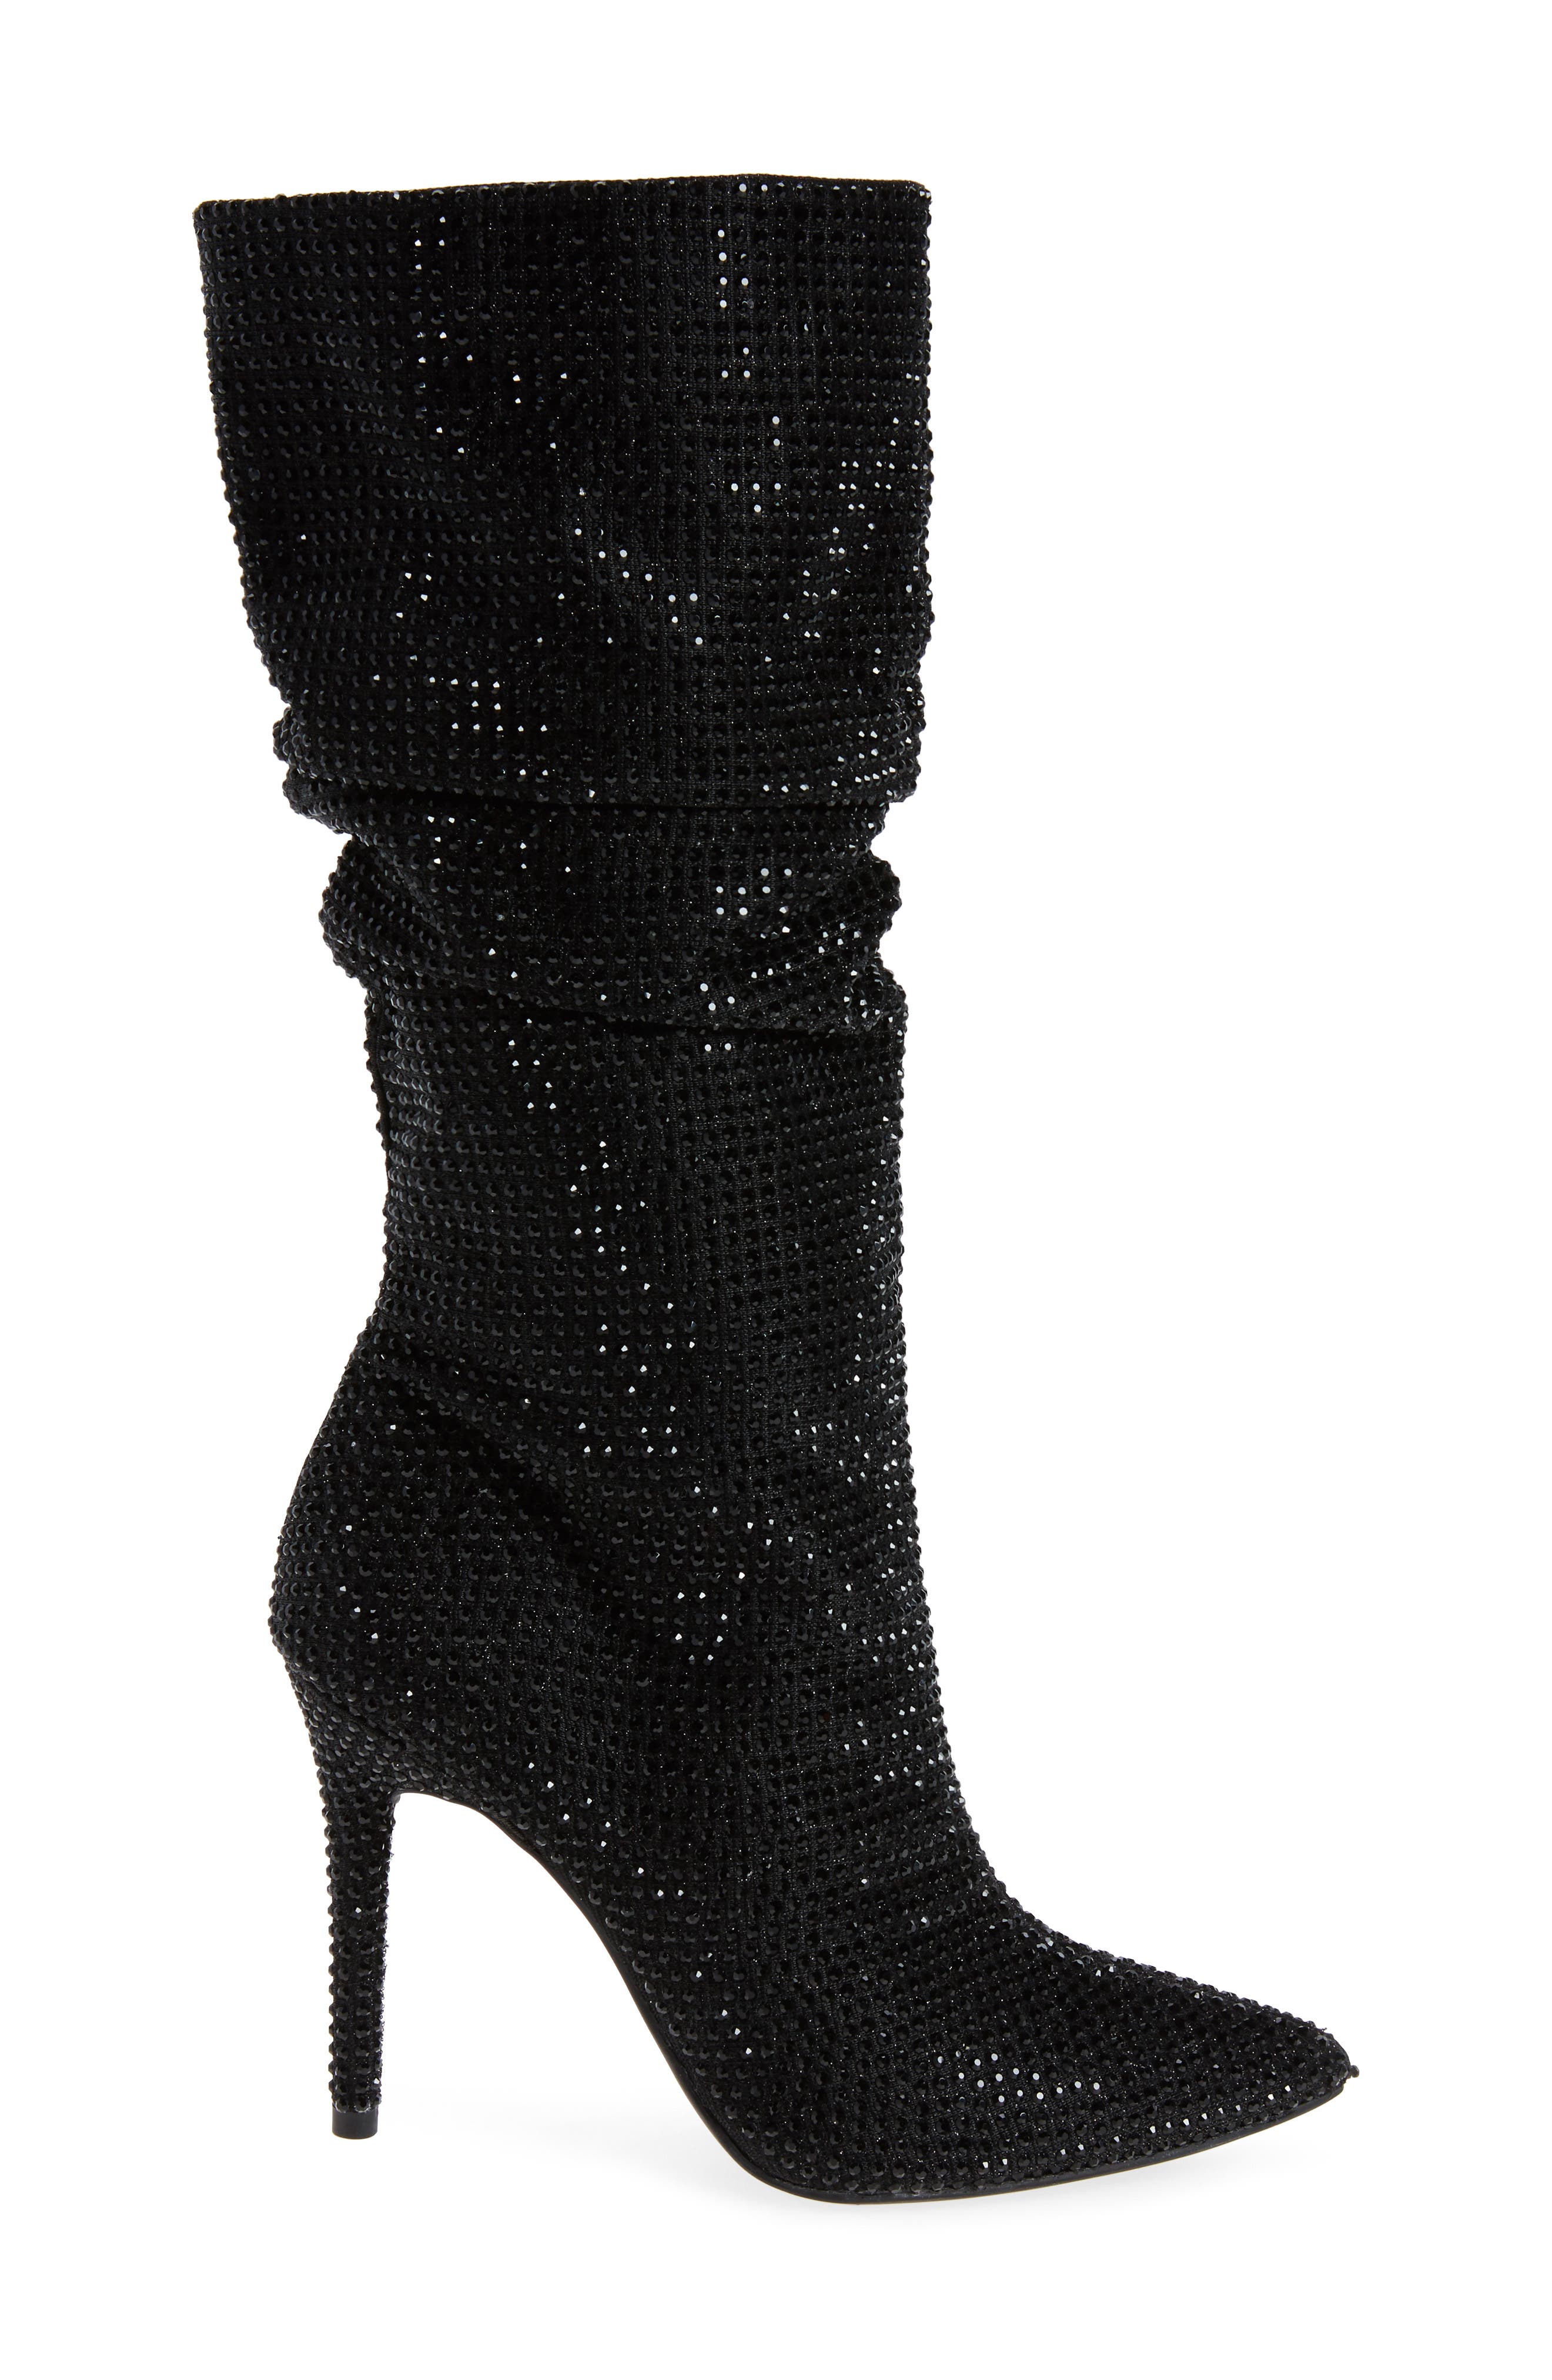 jessica simpson sparkly boots